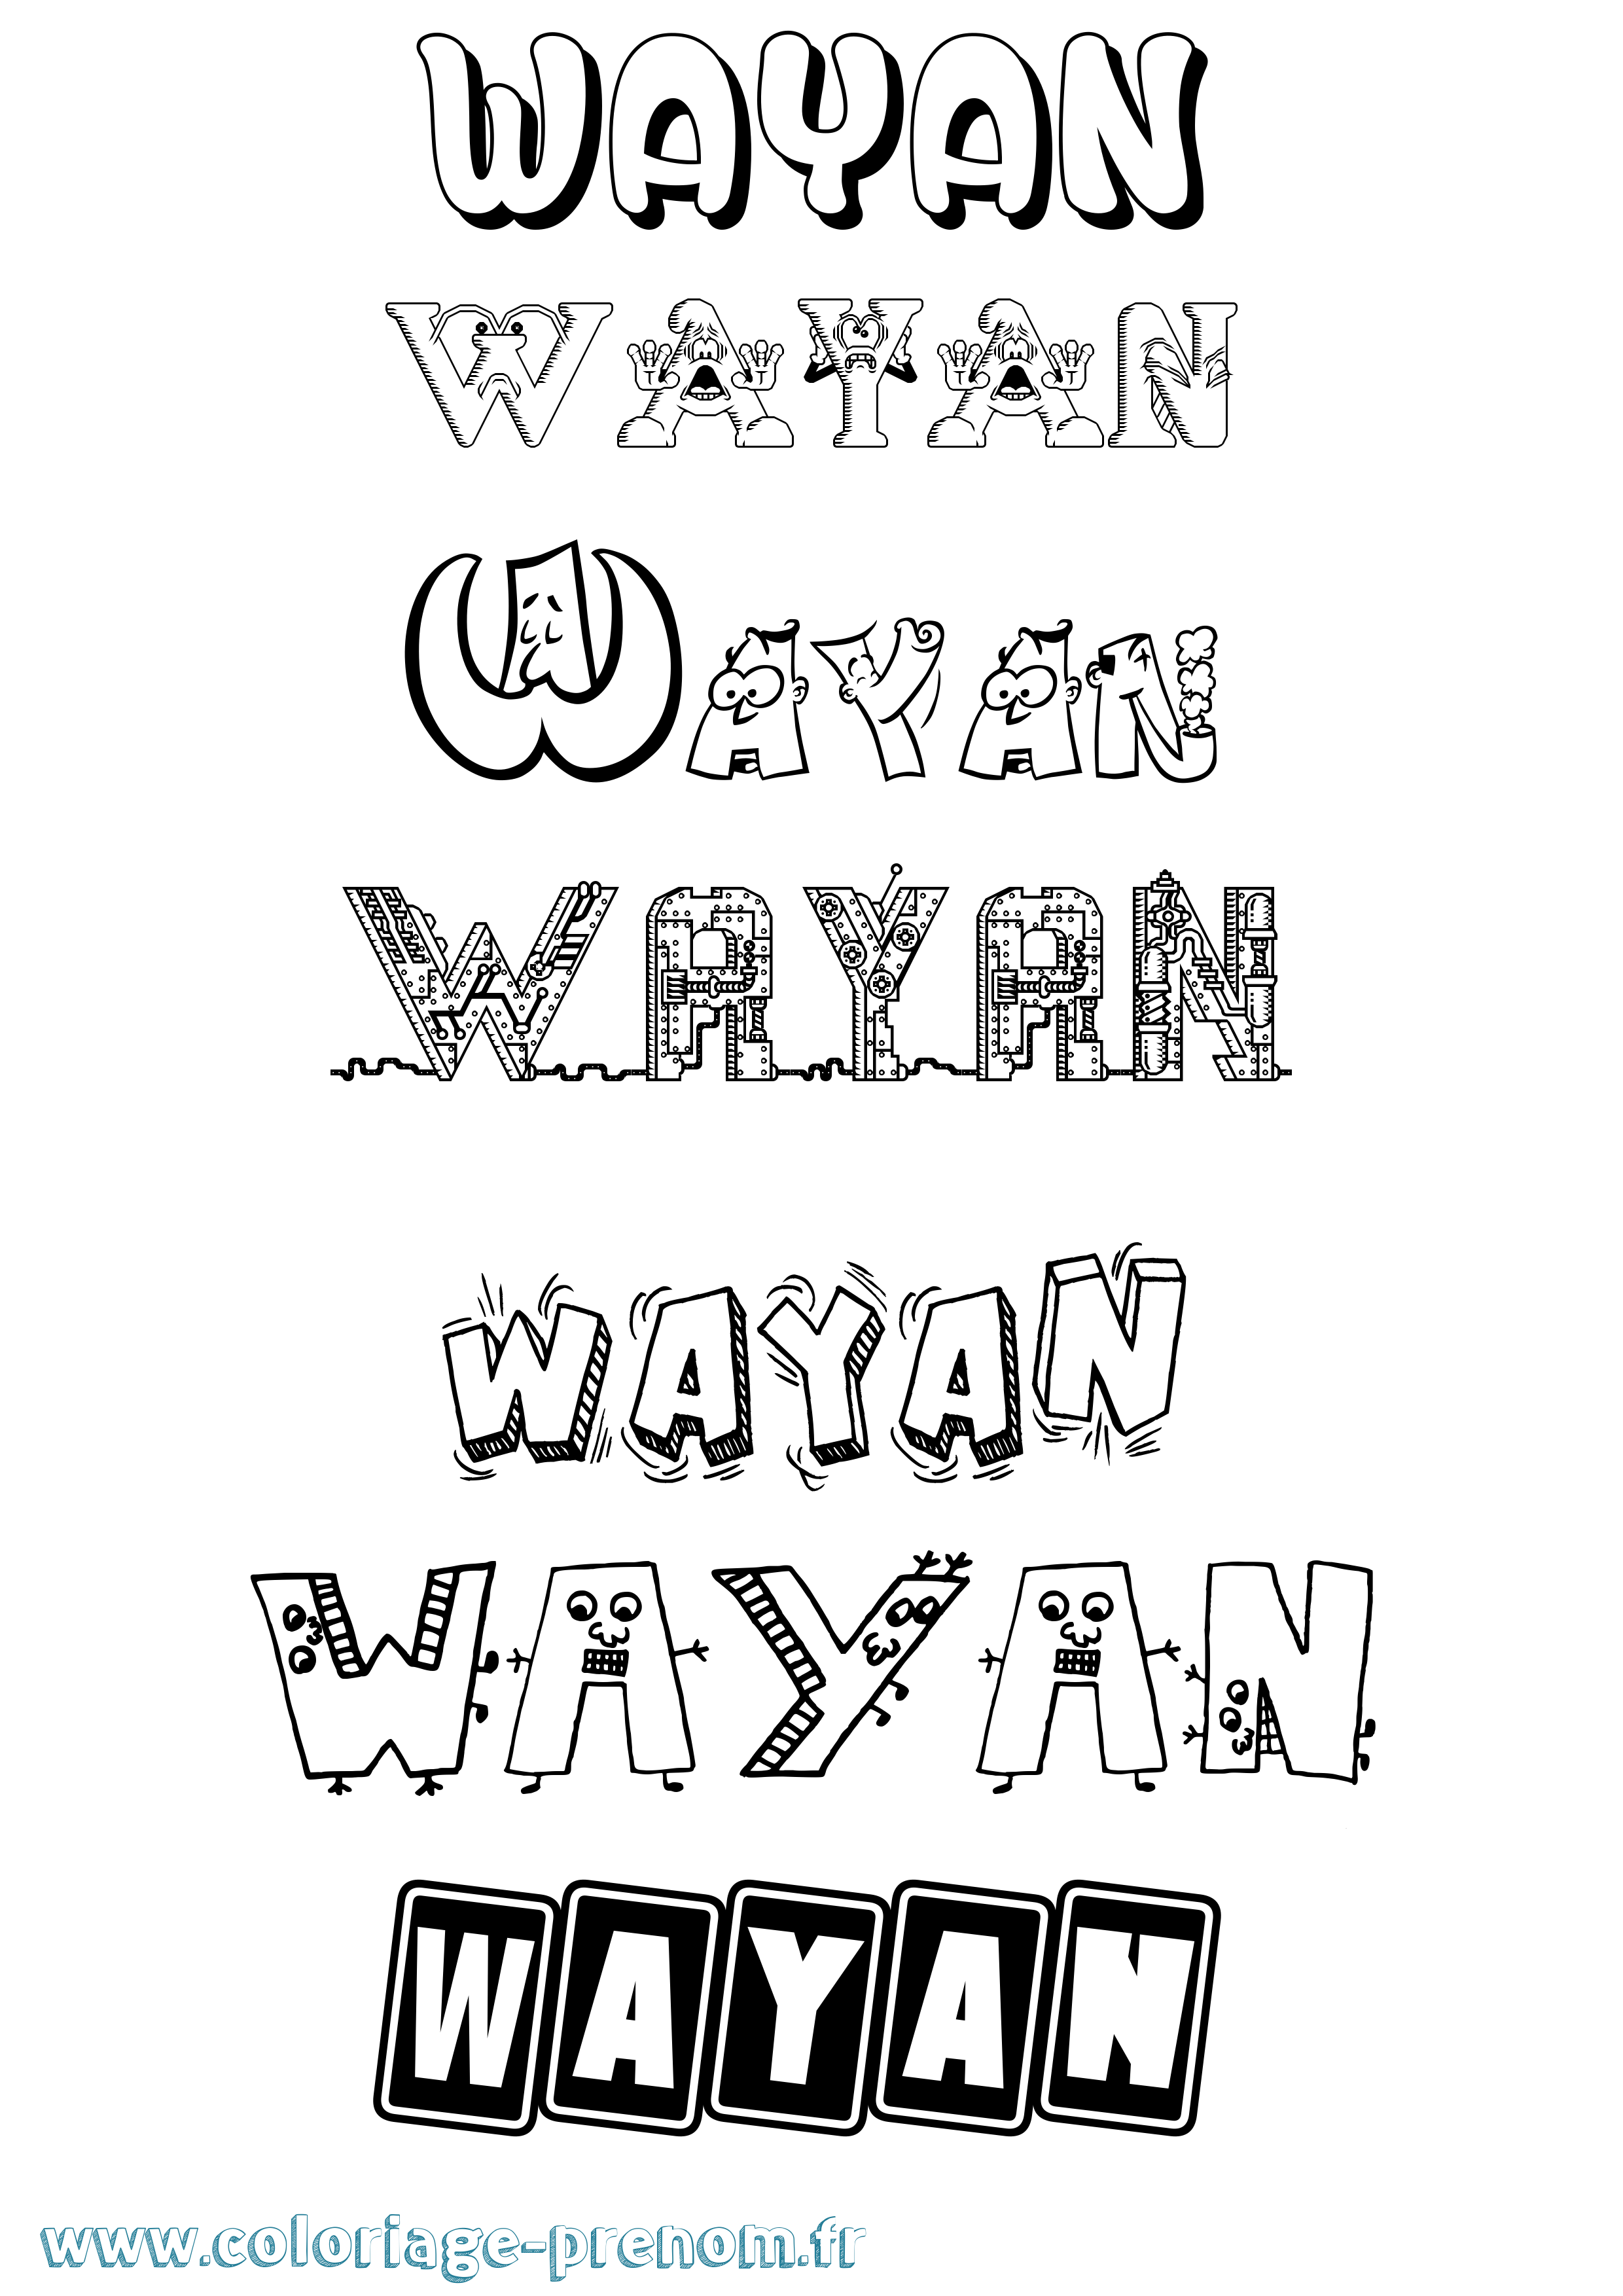 Coloriage prénom Wayan Fun